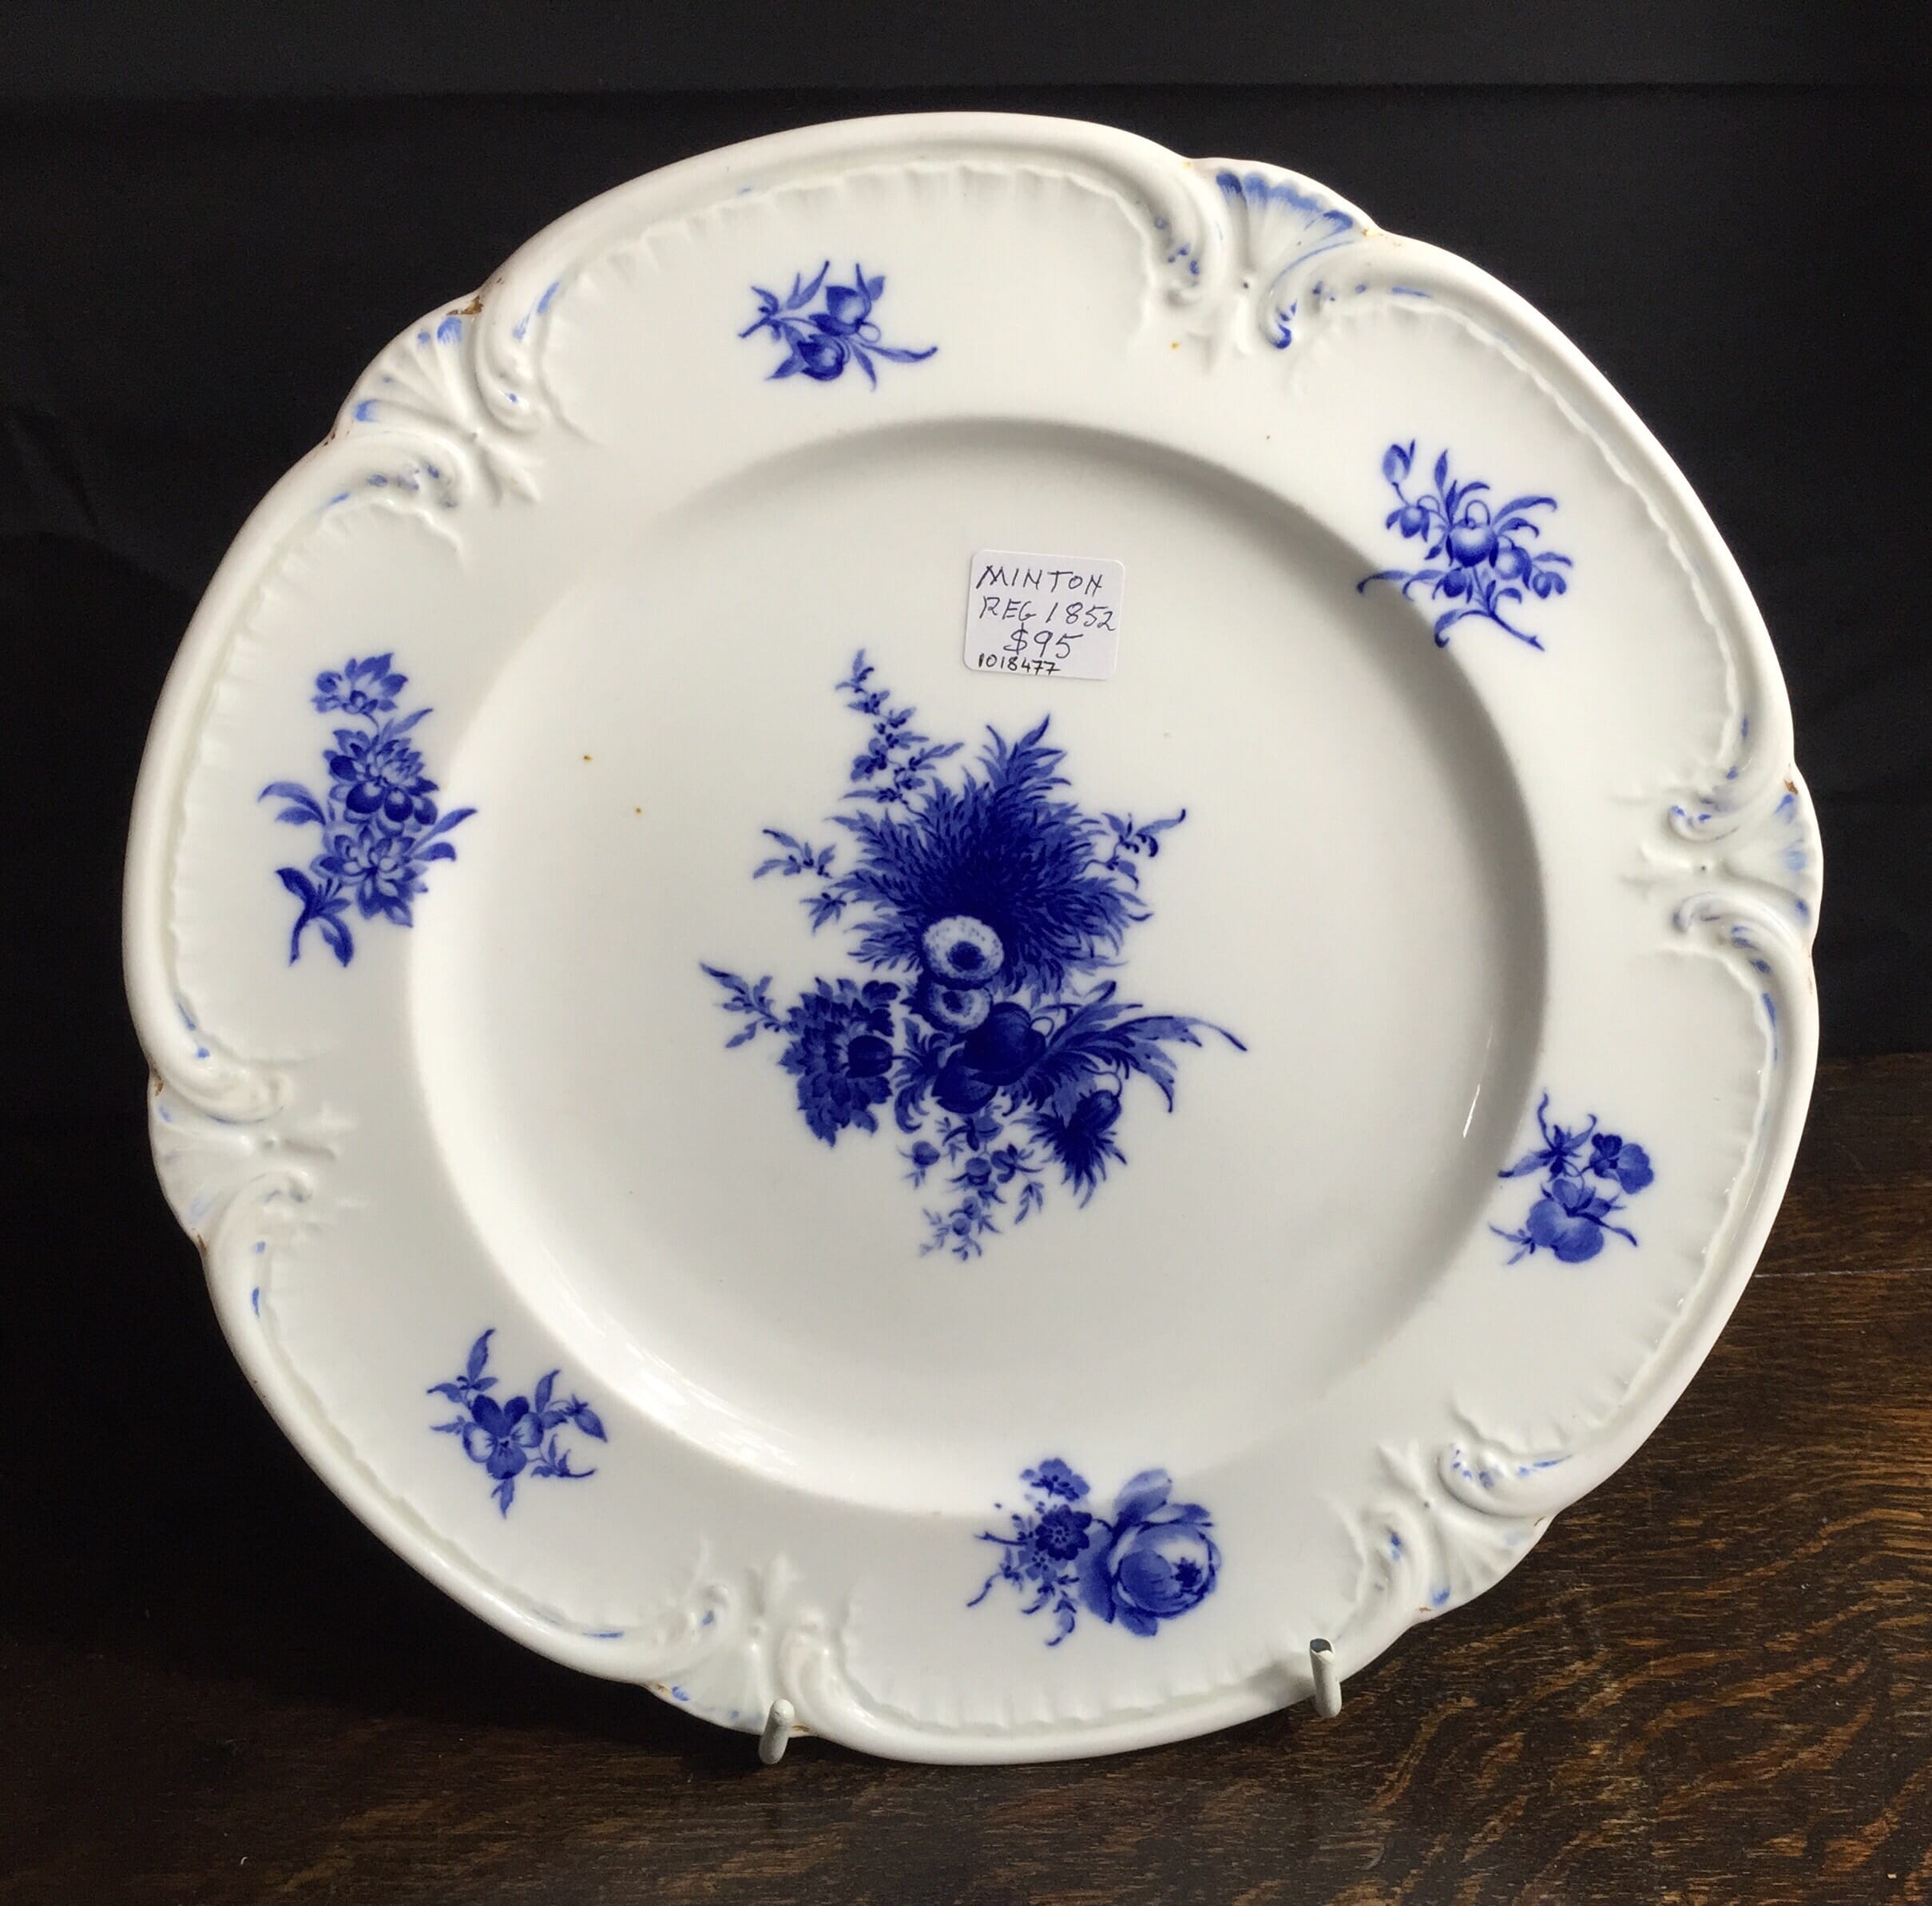 Minton bone china plate with blue flower sprays, registered mark 1852-0